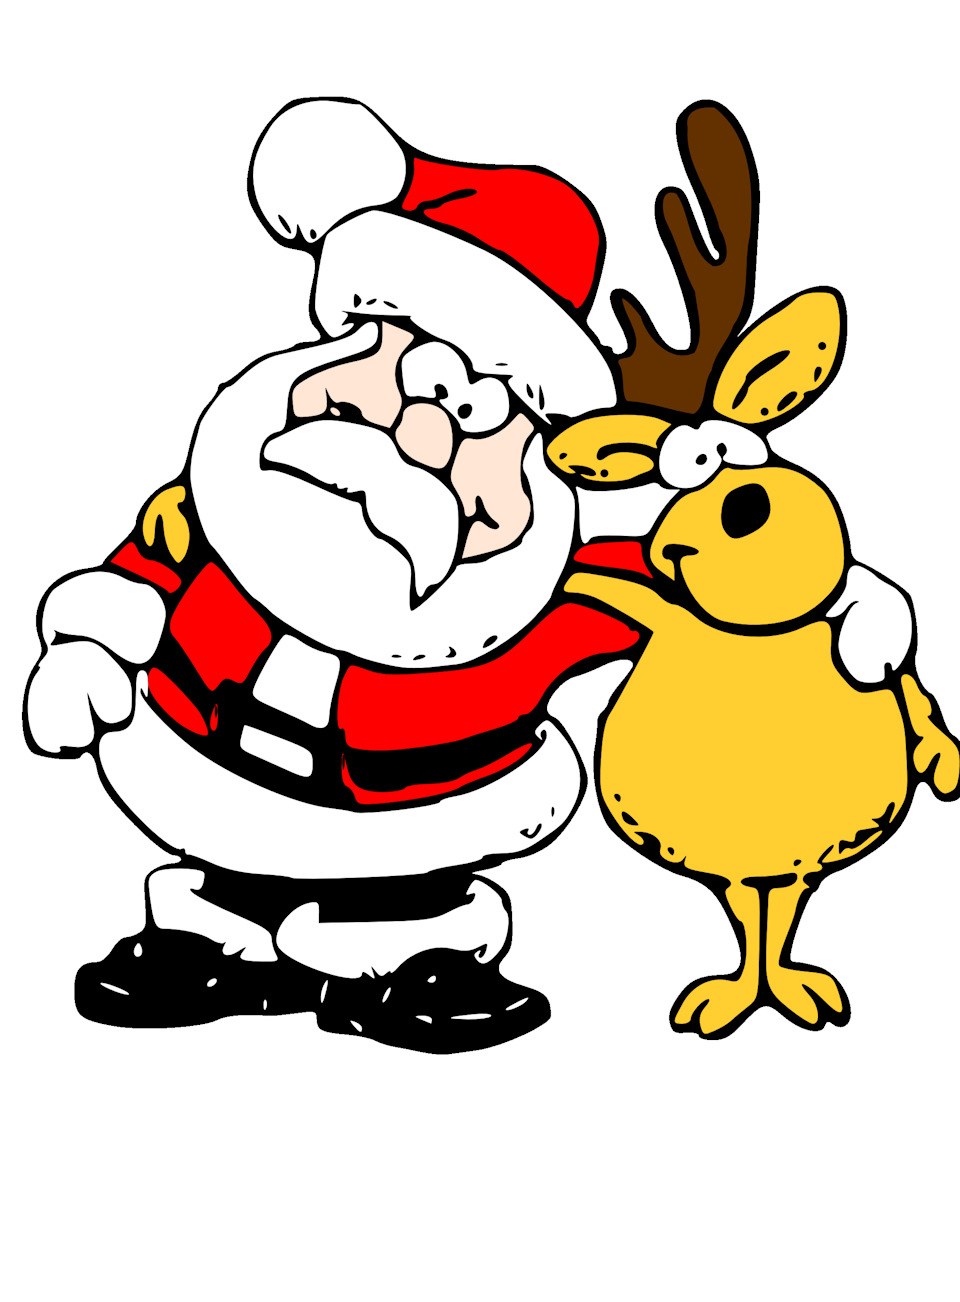 Санта Клаус и Рудольф